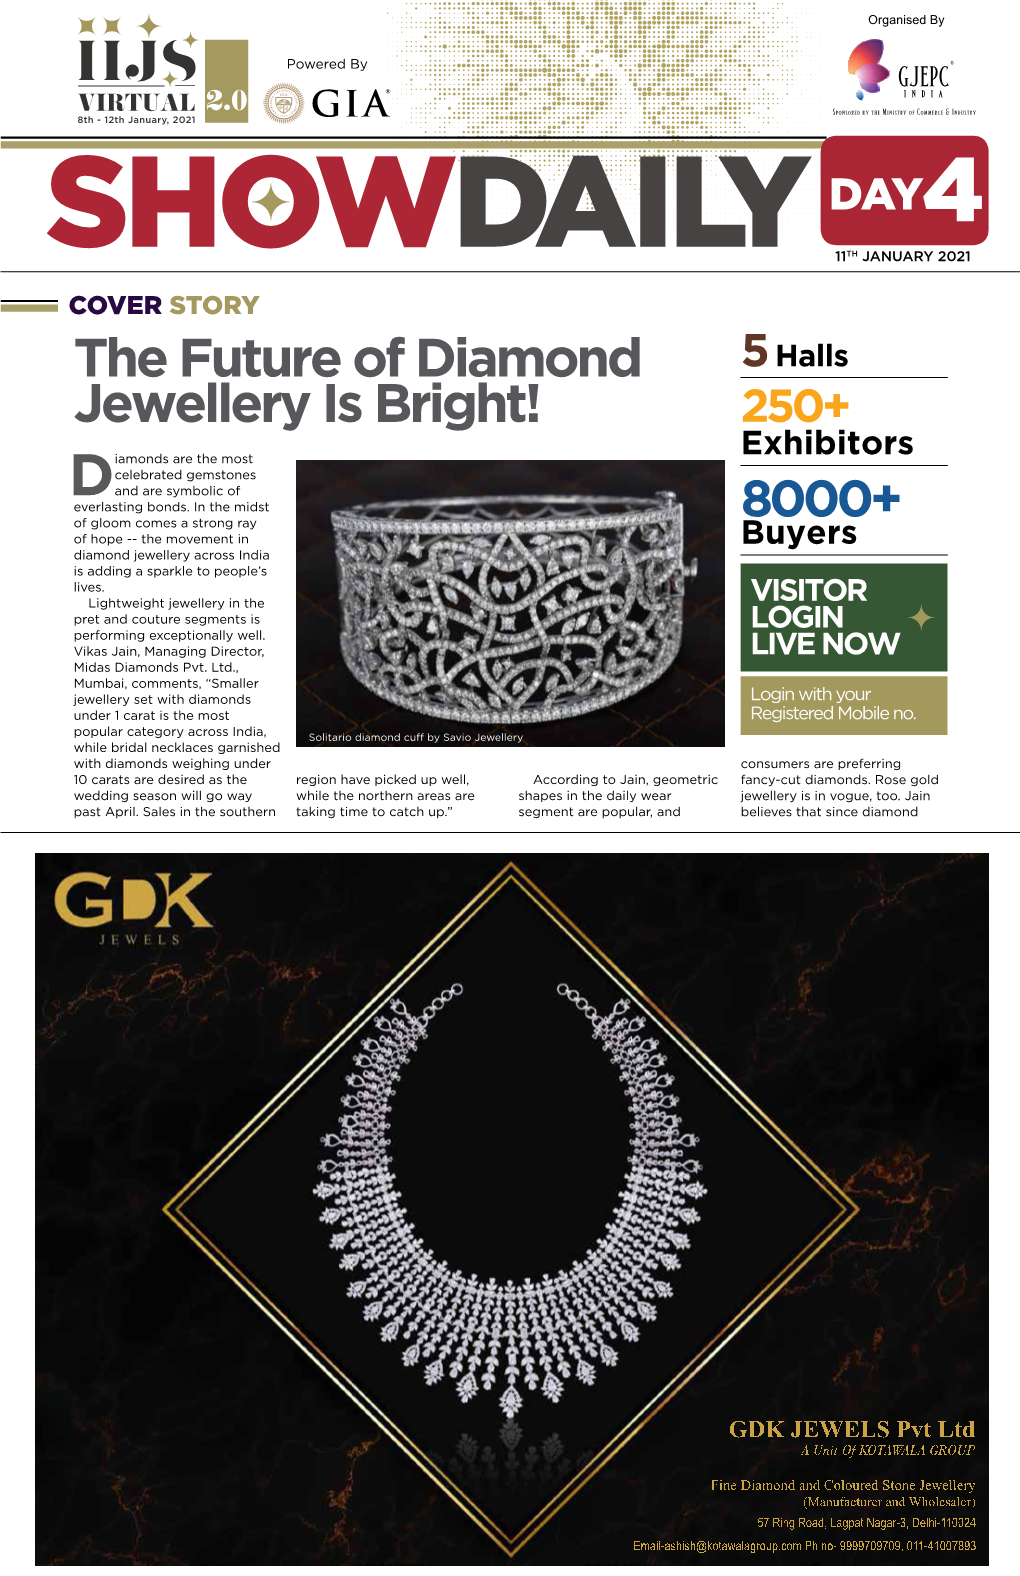 The Future of Diamond Jewellery Is Bright!